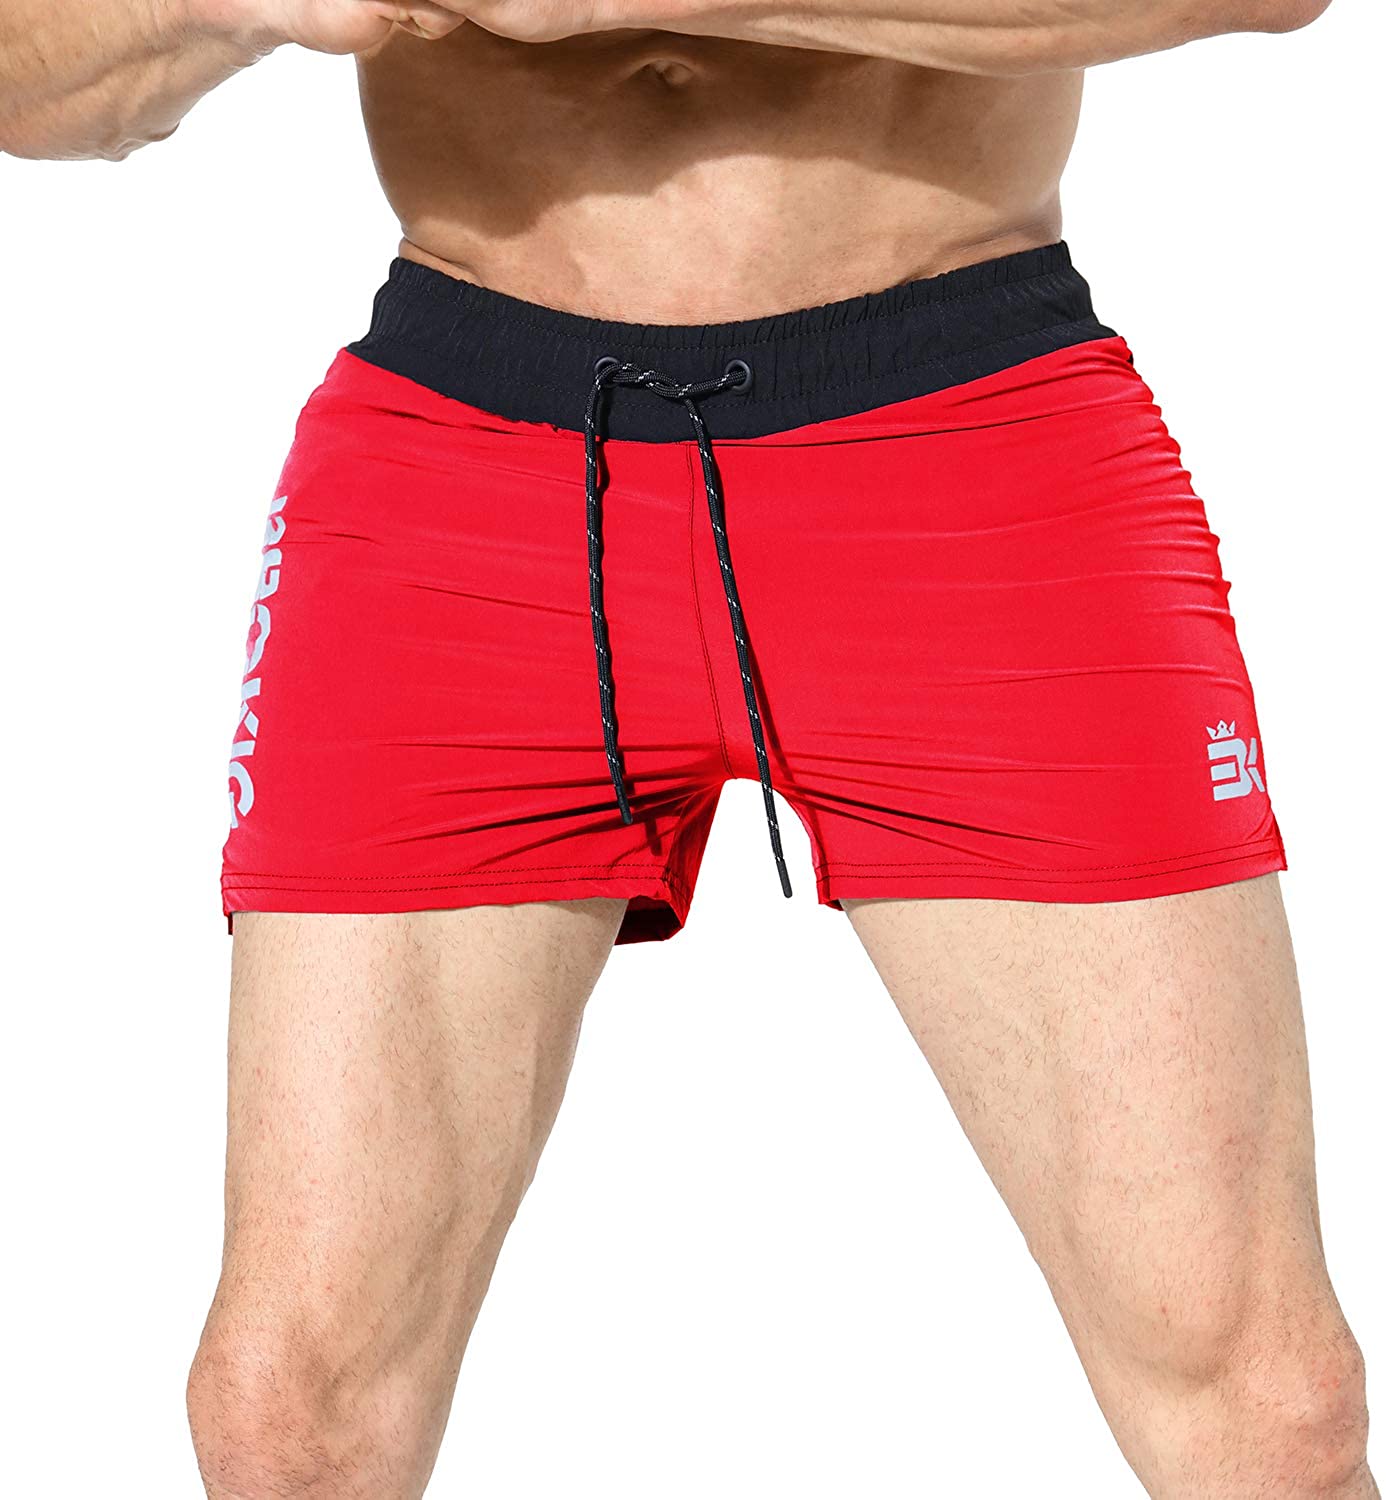 BROKIG Mens 5 Bodybuilding Gym Shorts,Workout Running Lightweight Shorts with Zip-Pockets 